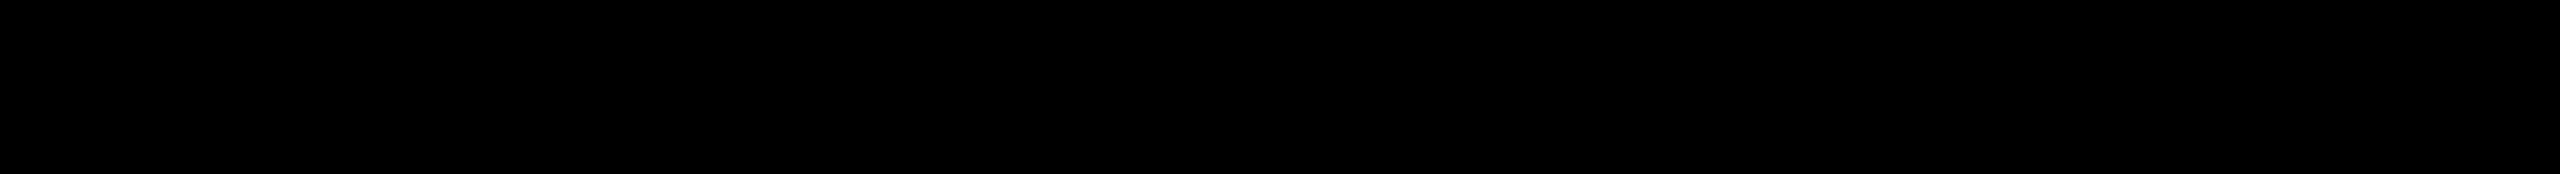 GUGGENHEIM BILBAO logo